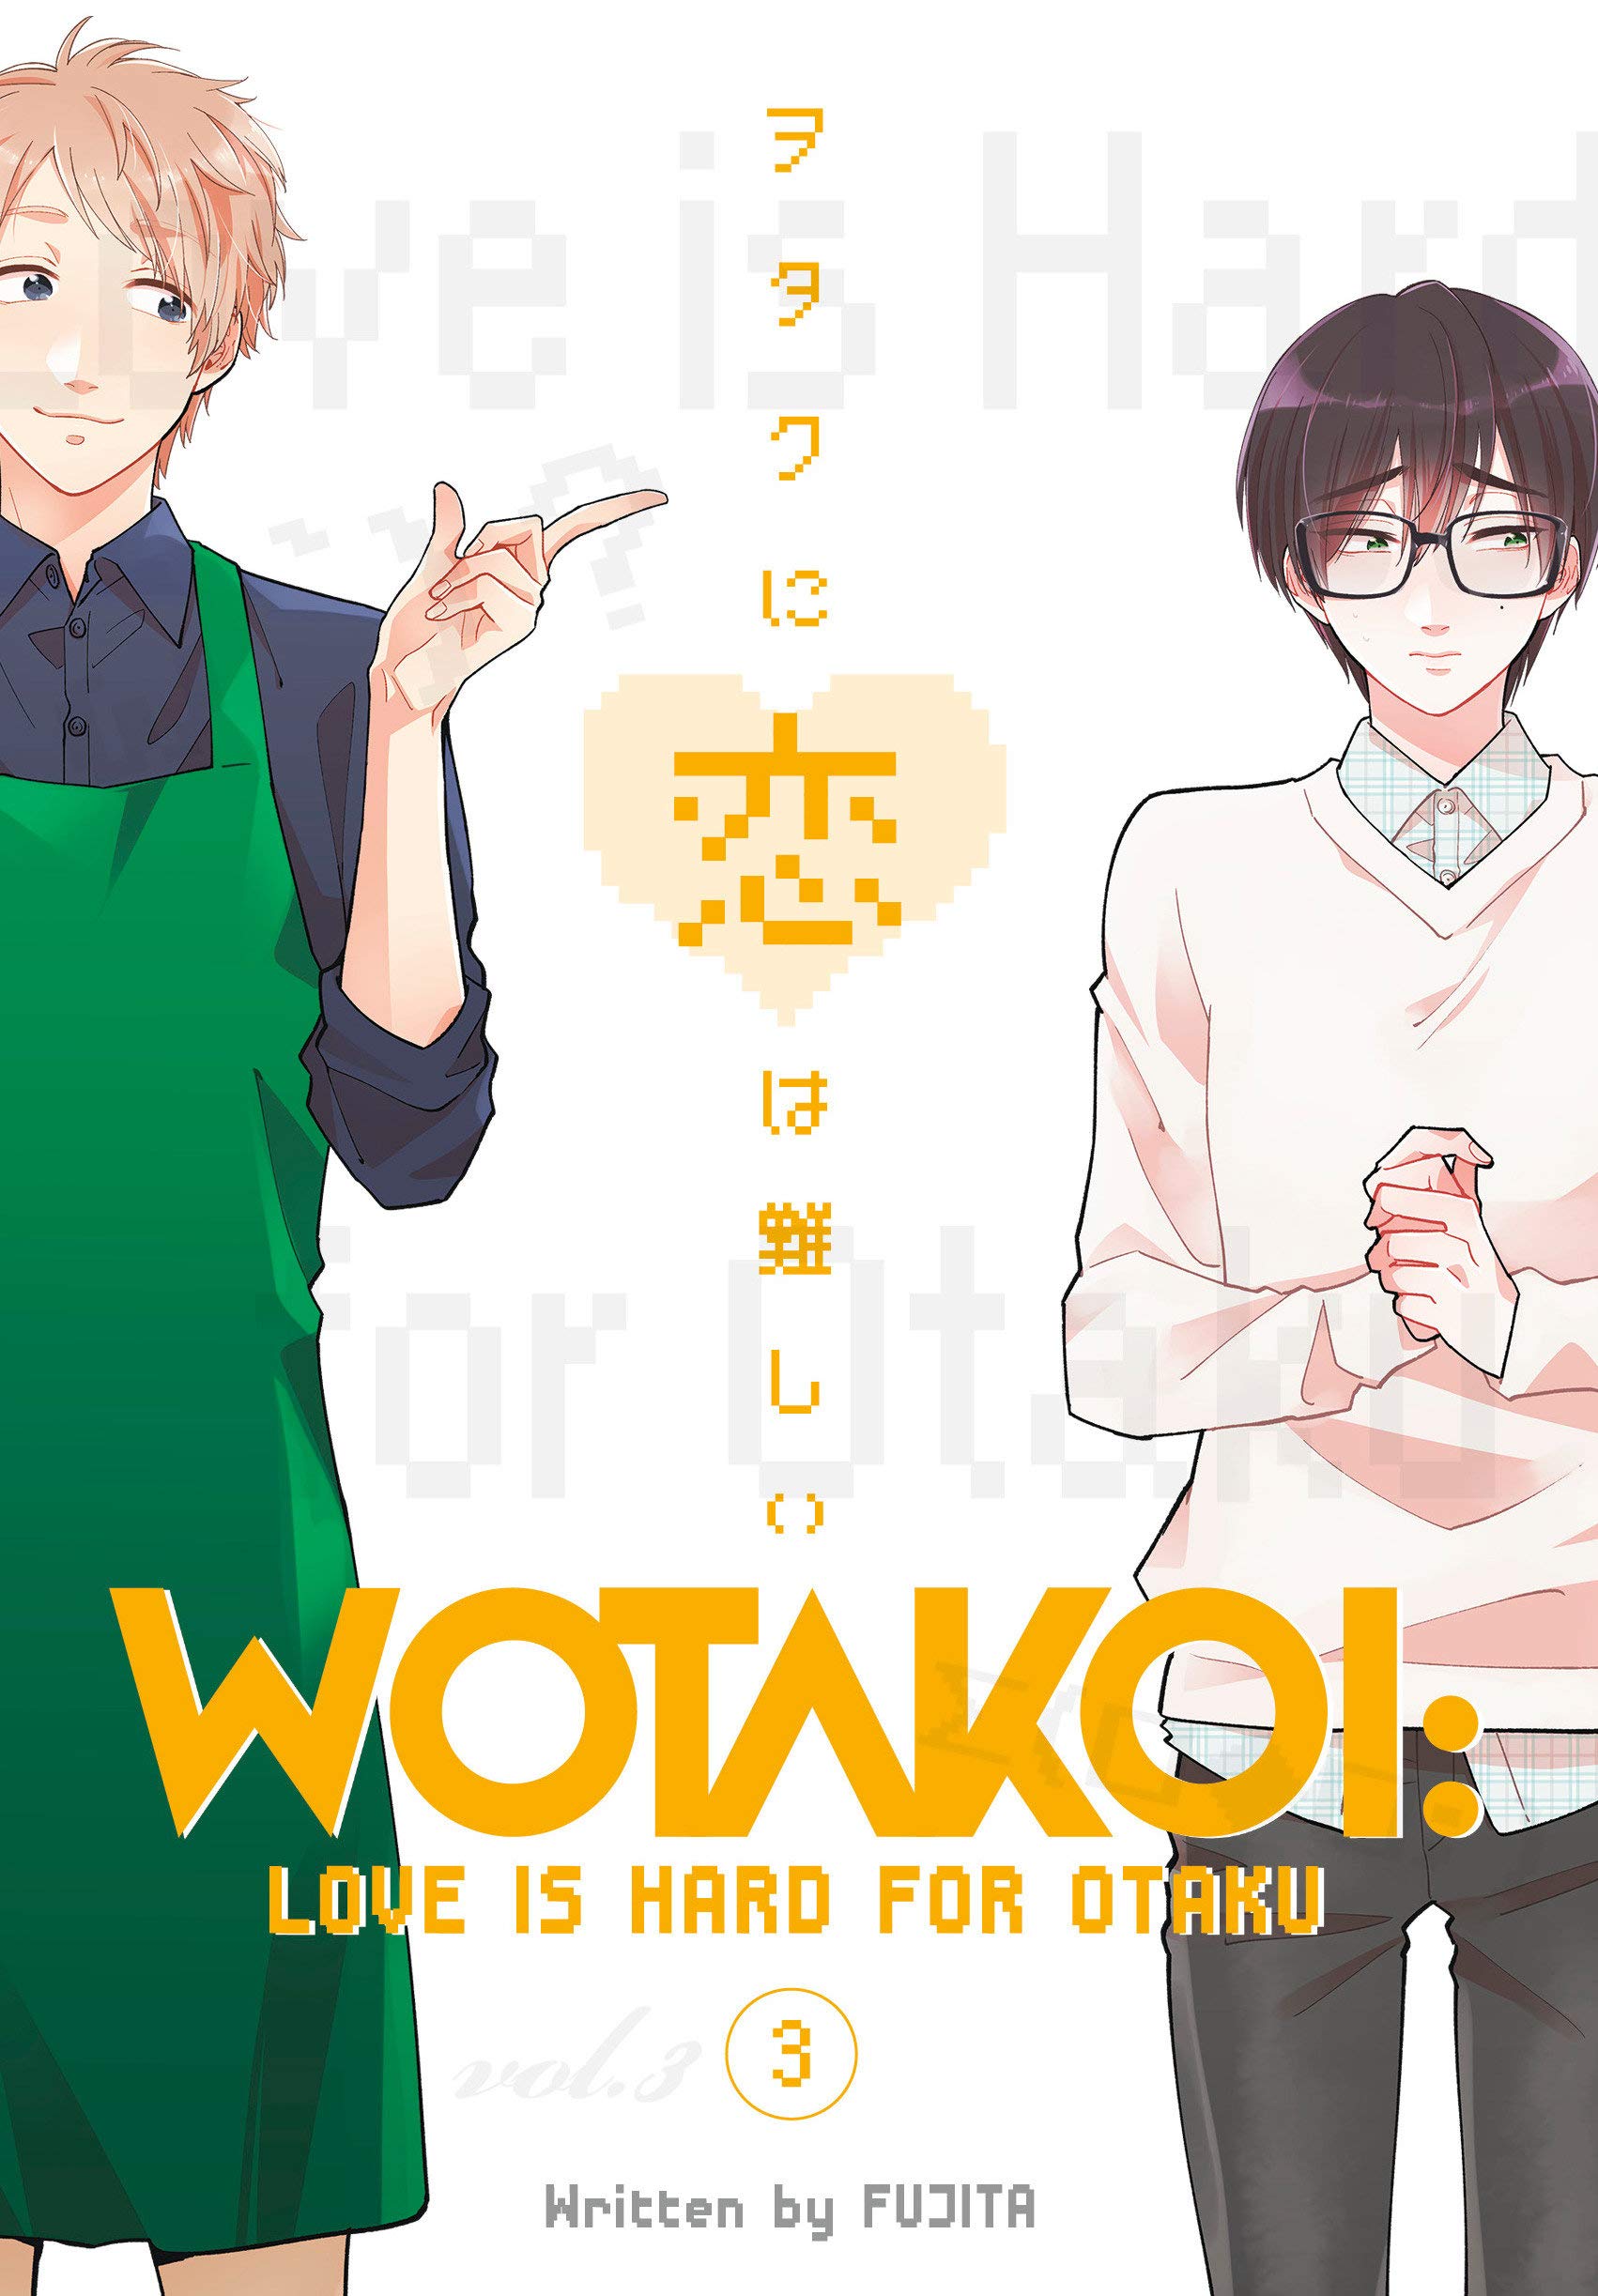 Wotakoi: Love is Hard for Otaku Review